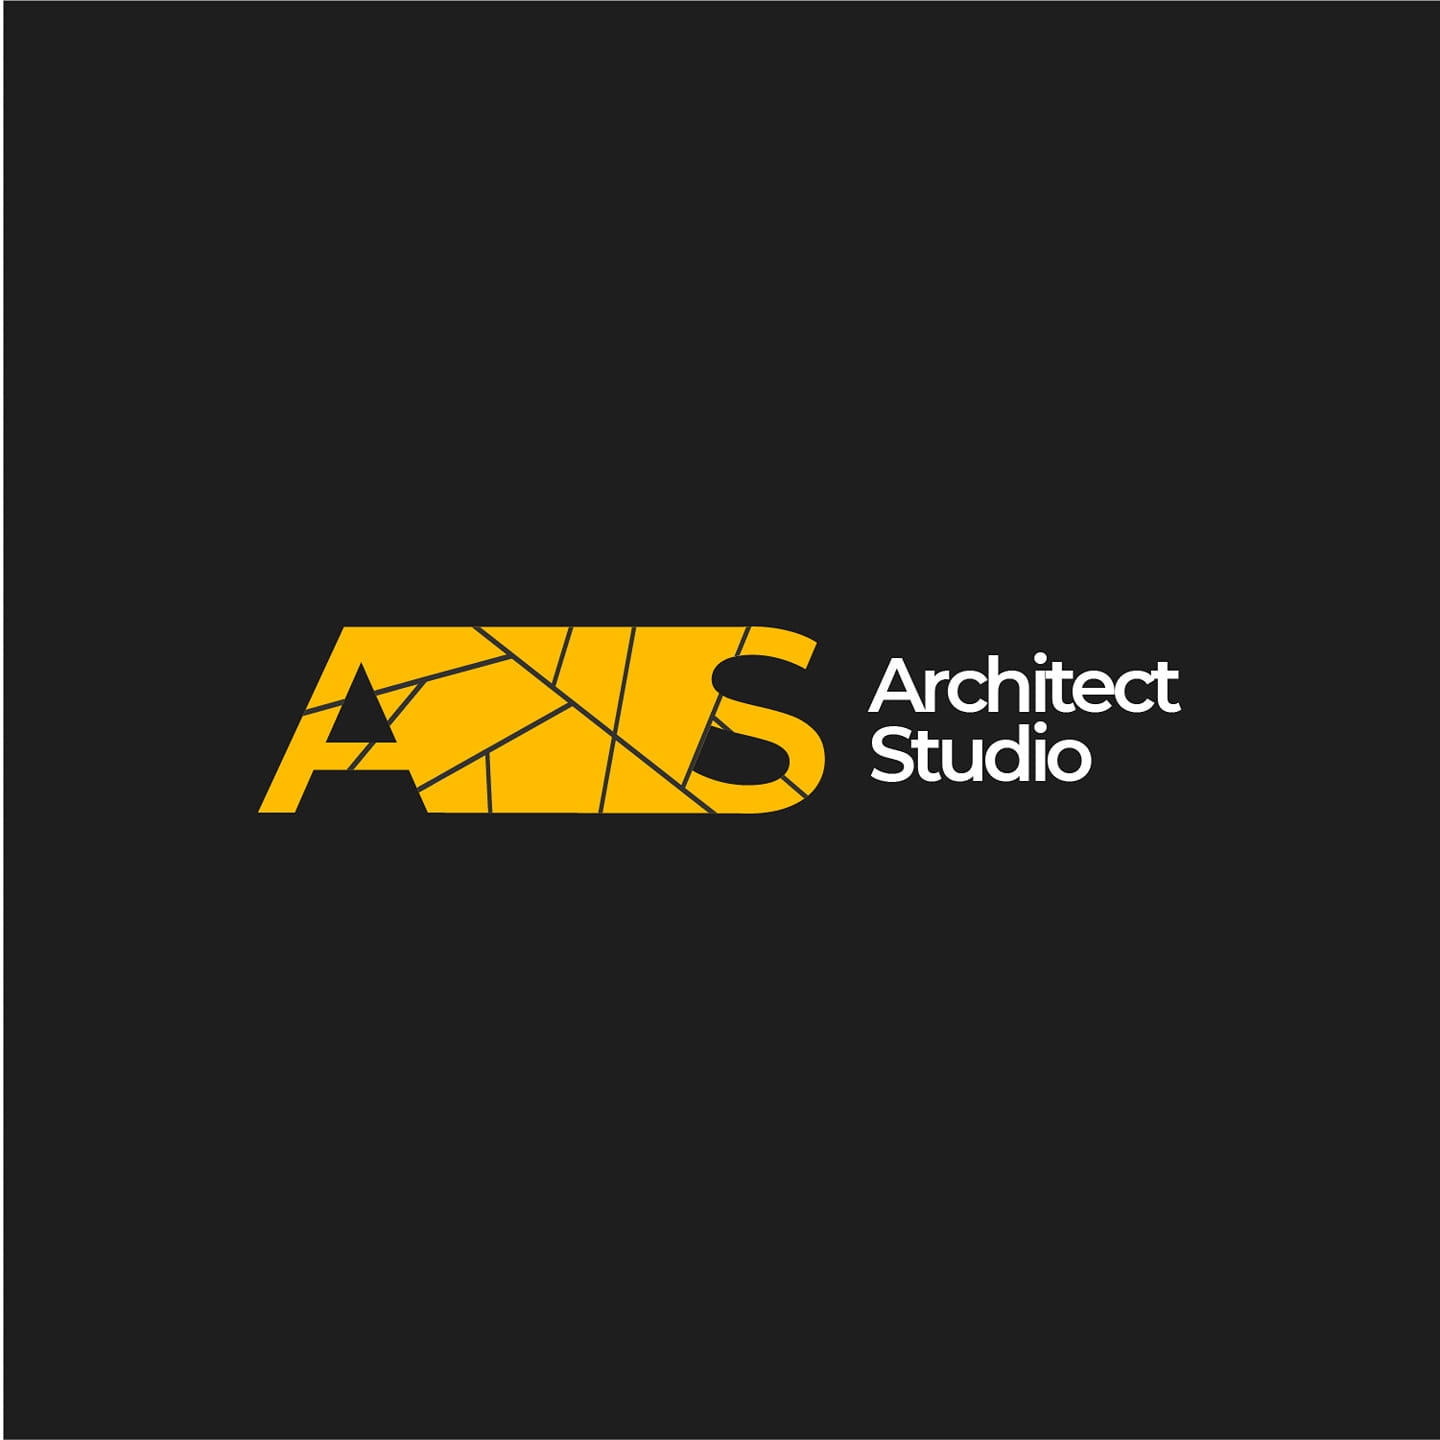 Architect Studio|Architect|Professional Services